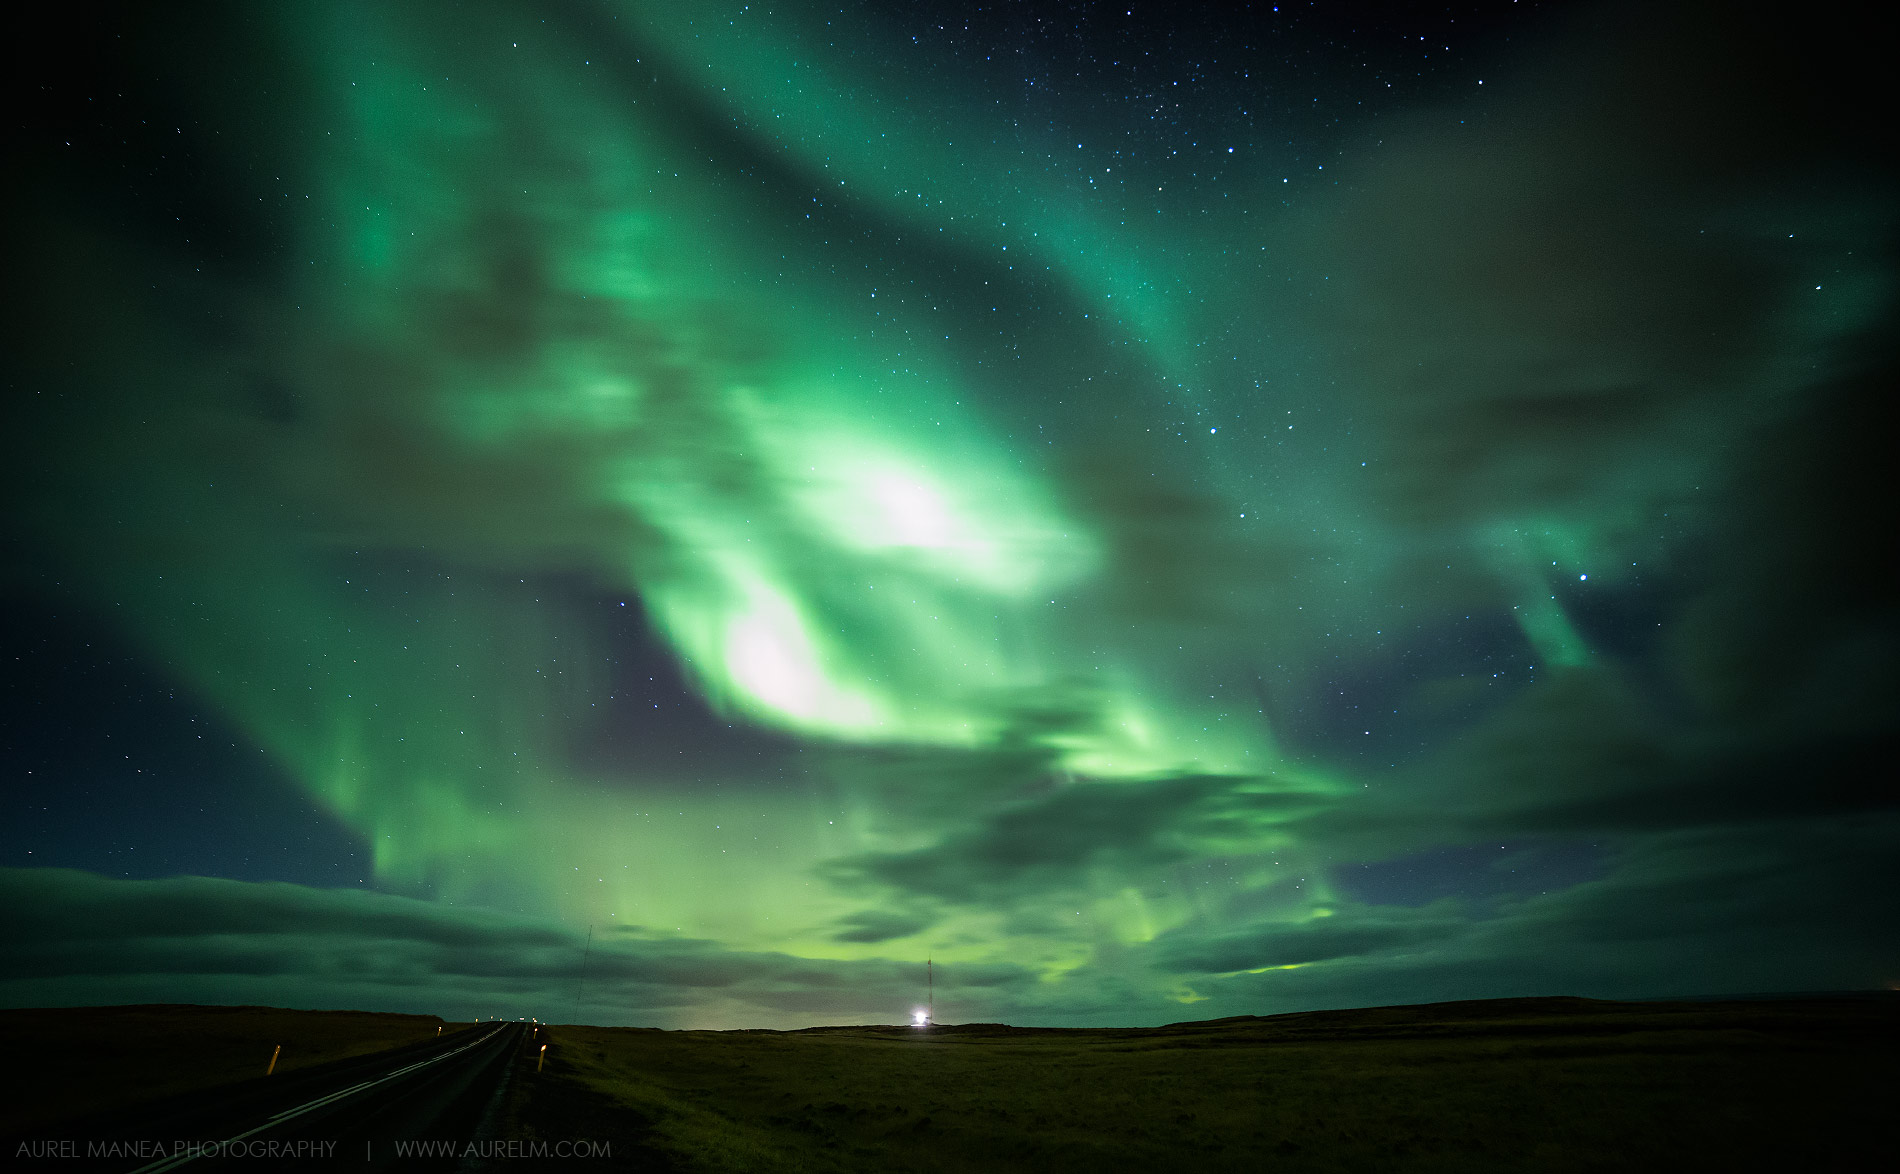 Gallery Highres Iceland Northern lights 09